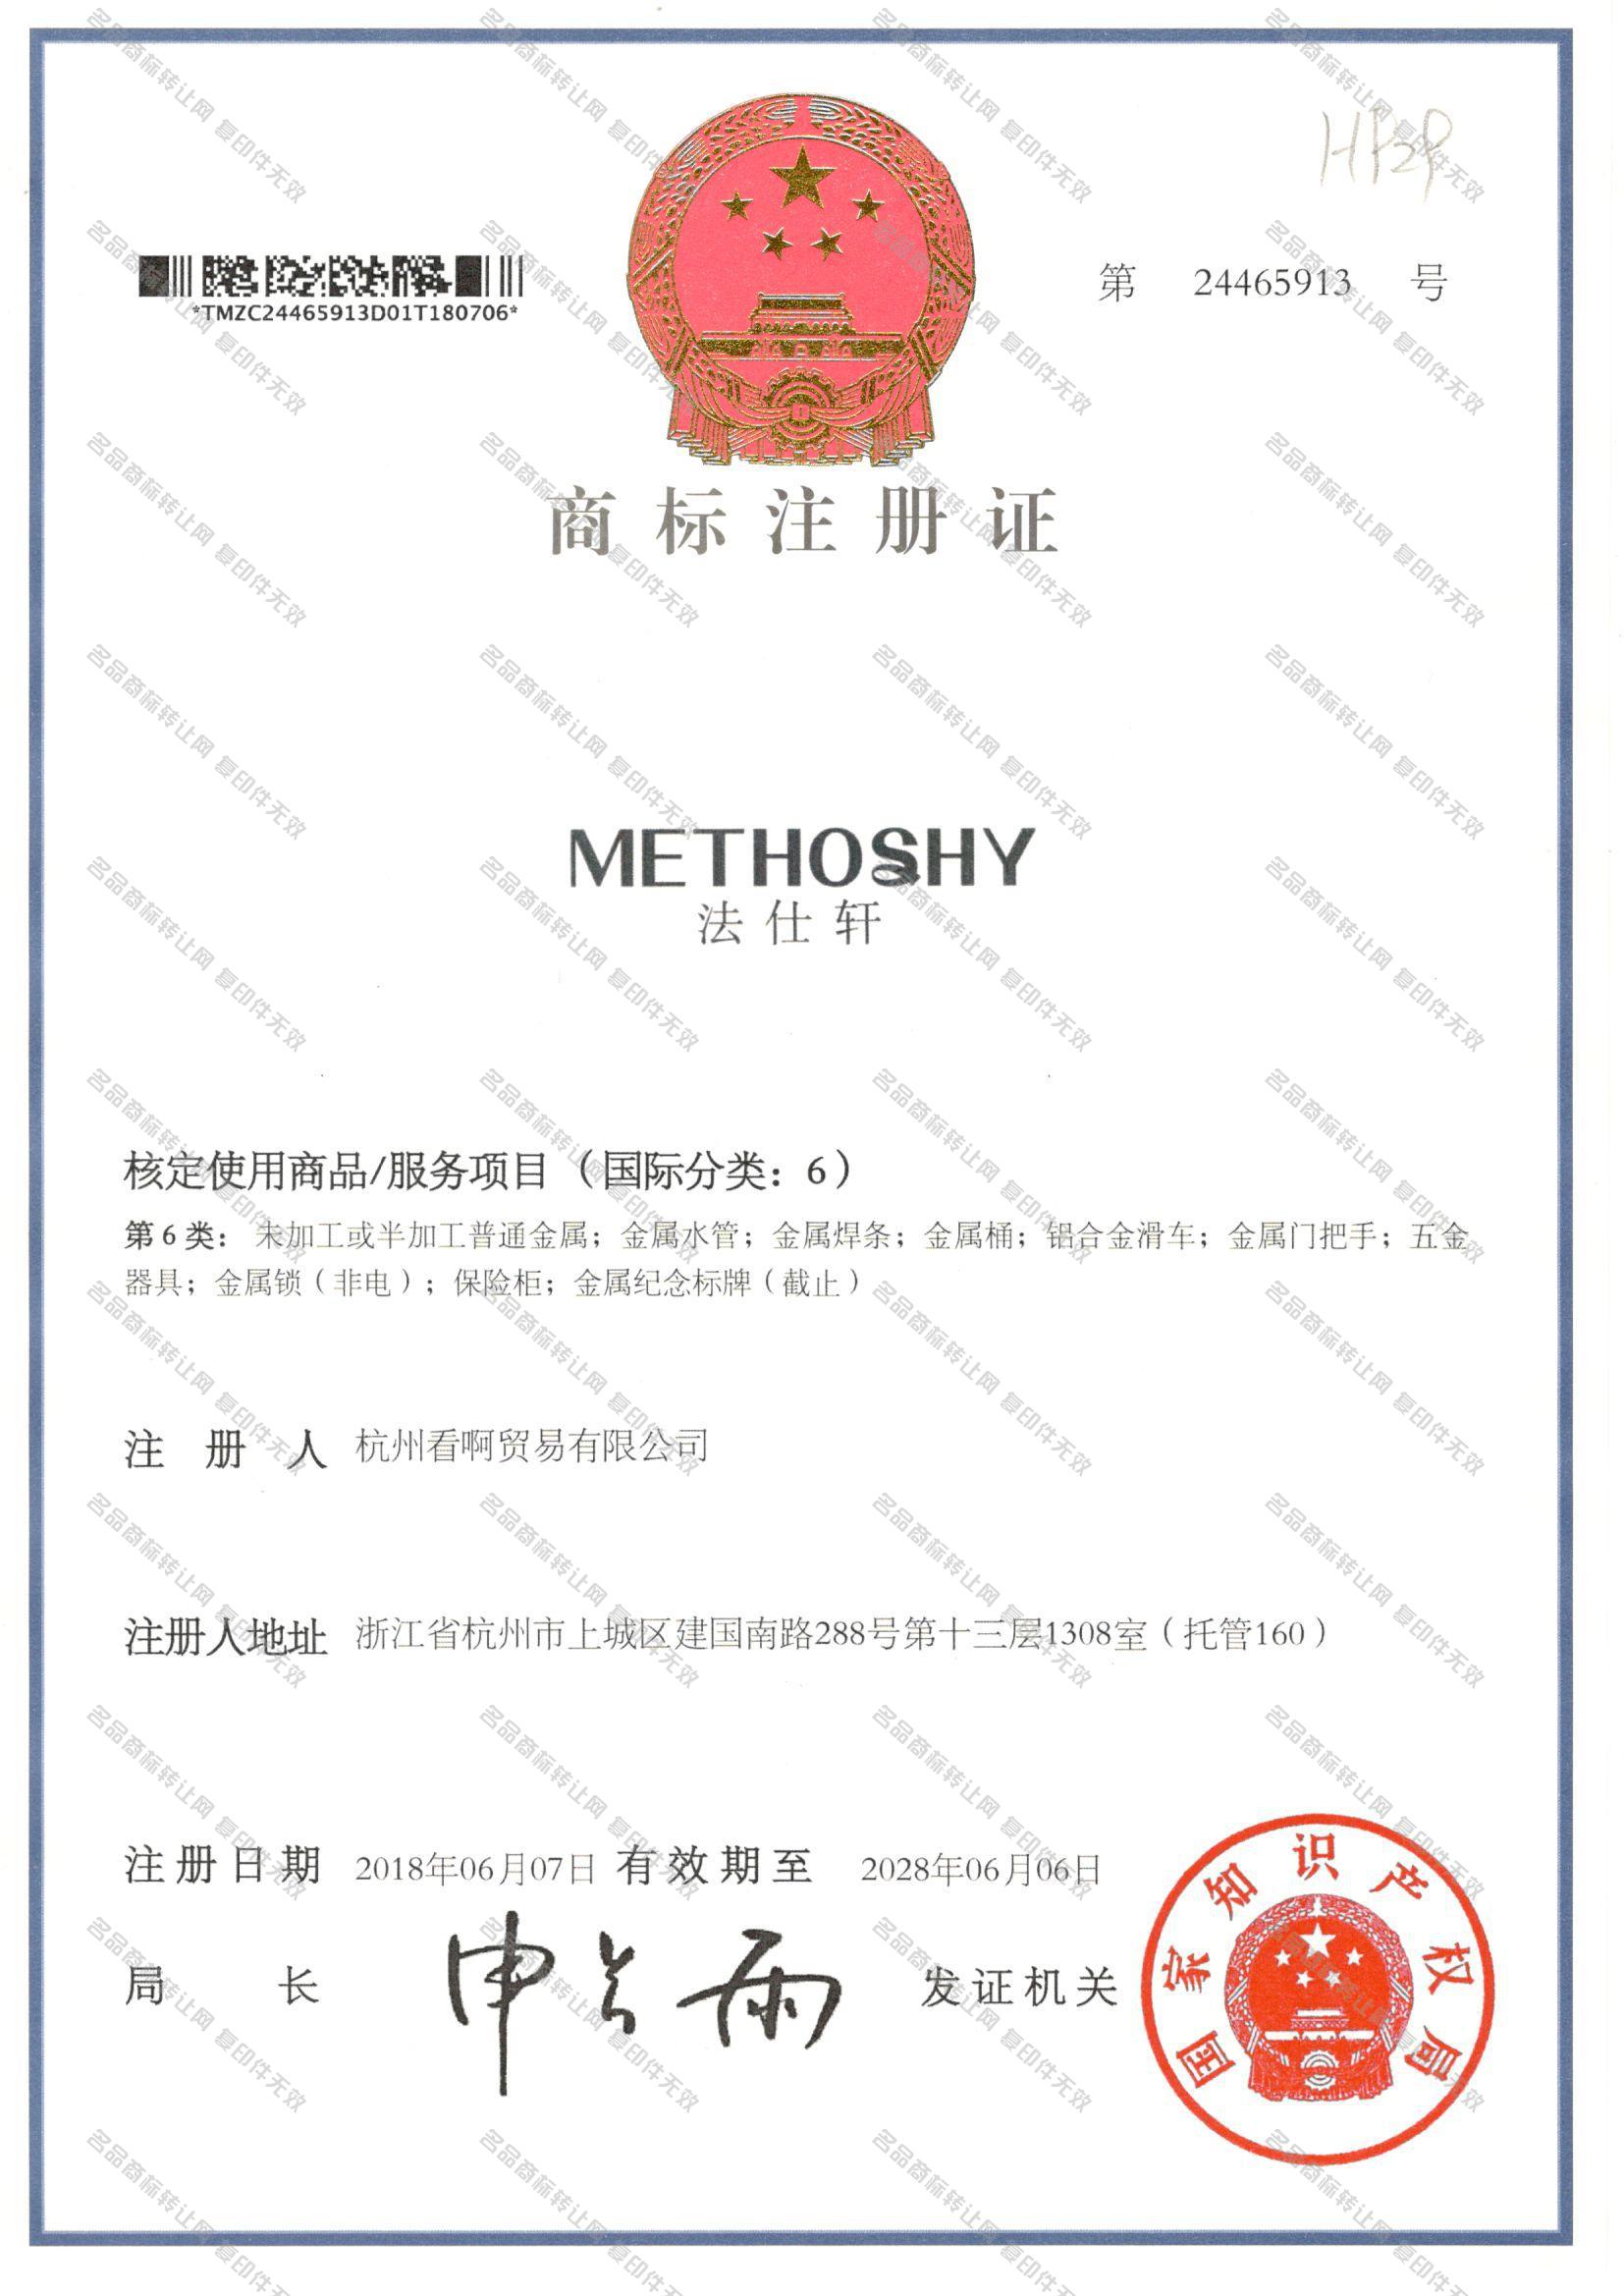 法仕轩 METHOSHY注册证